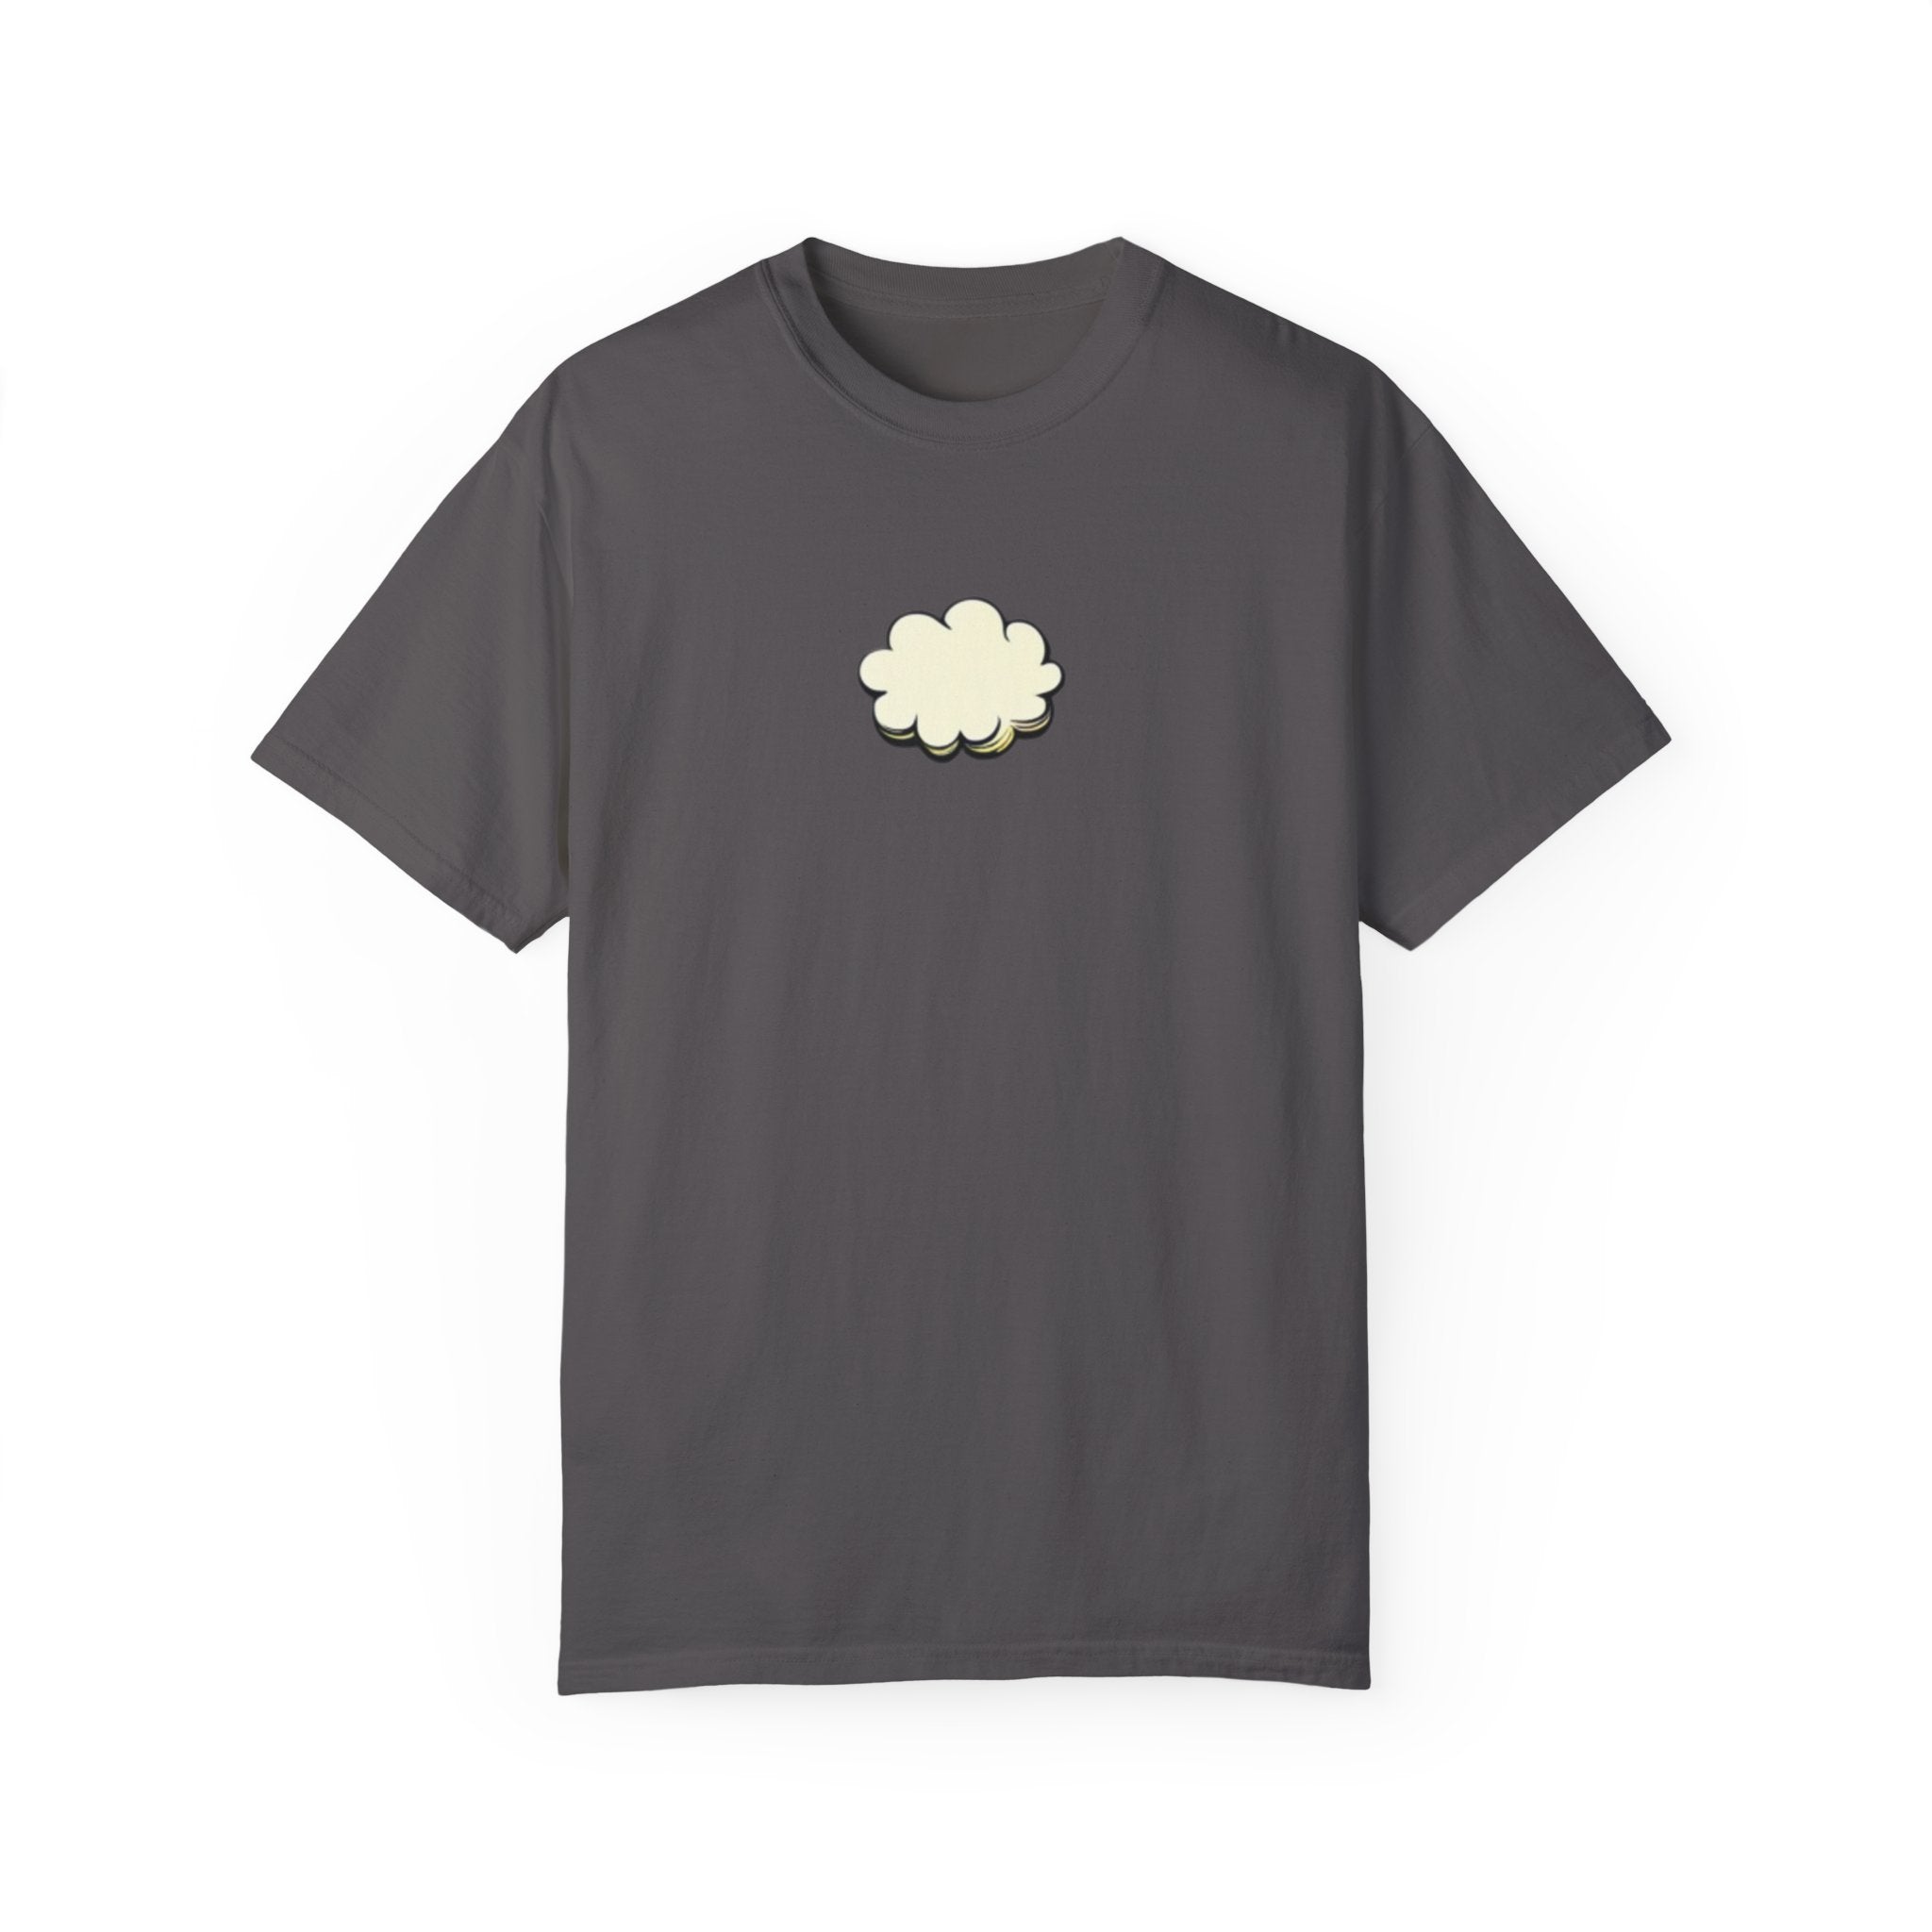 TRAVEL BUDDY Unisex Garment-Dyed T-shirt